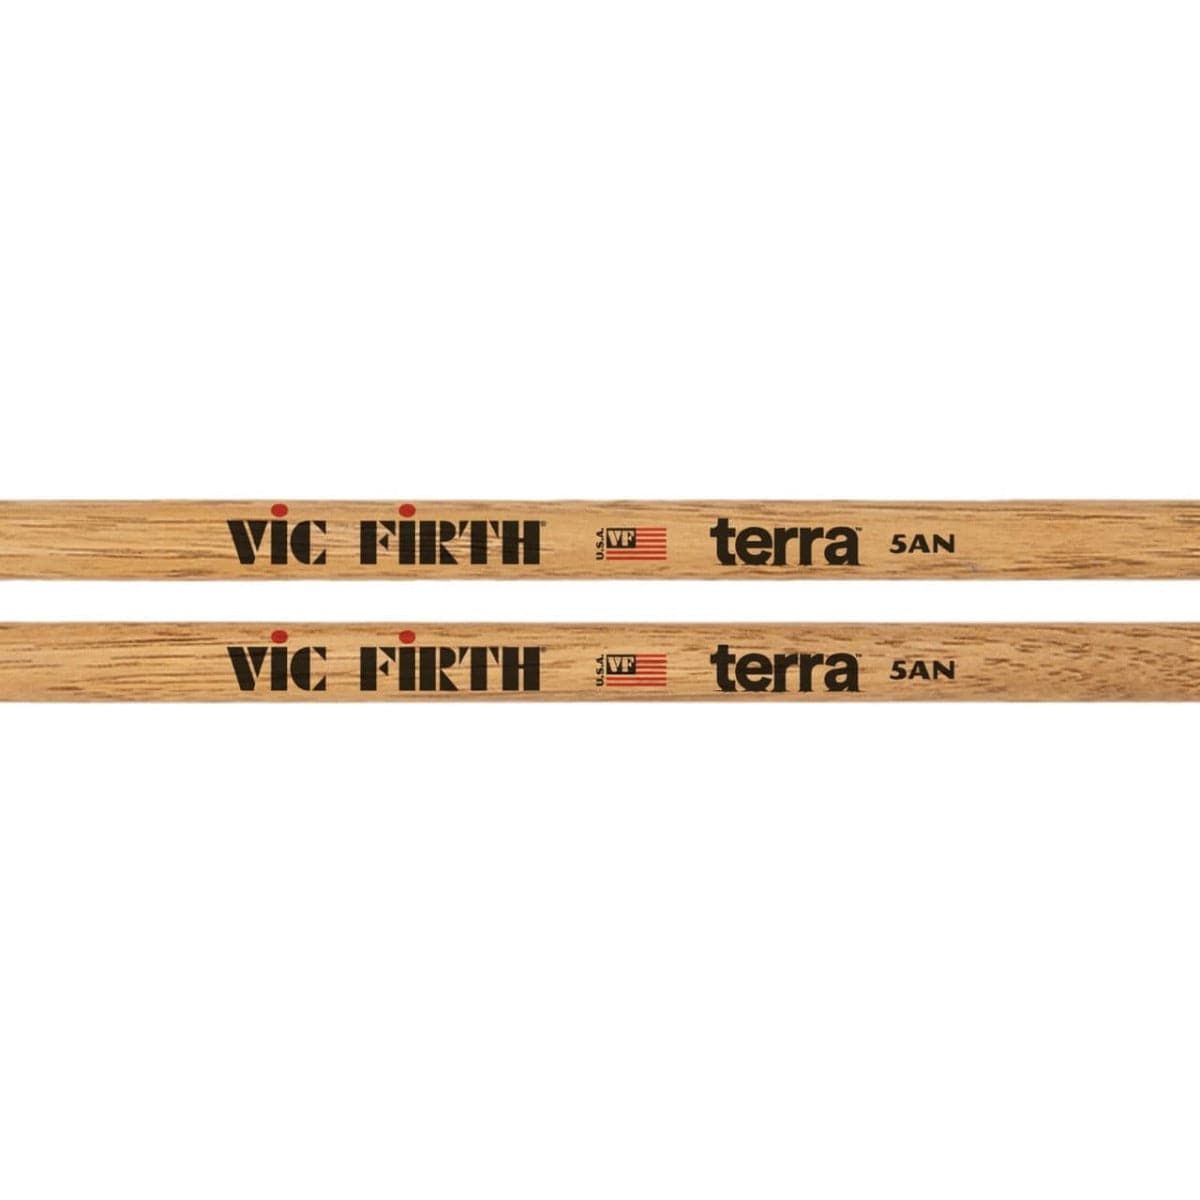 Vic Firth American Classic 5ATN Terra Series Drumsticks, 4pr Value Pack